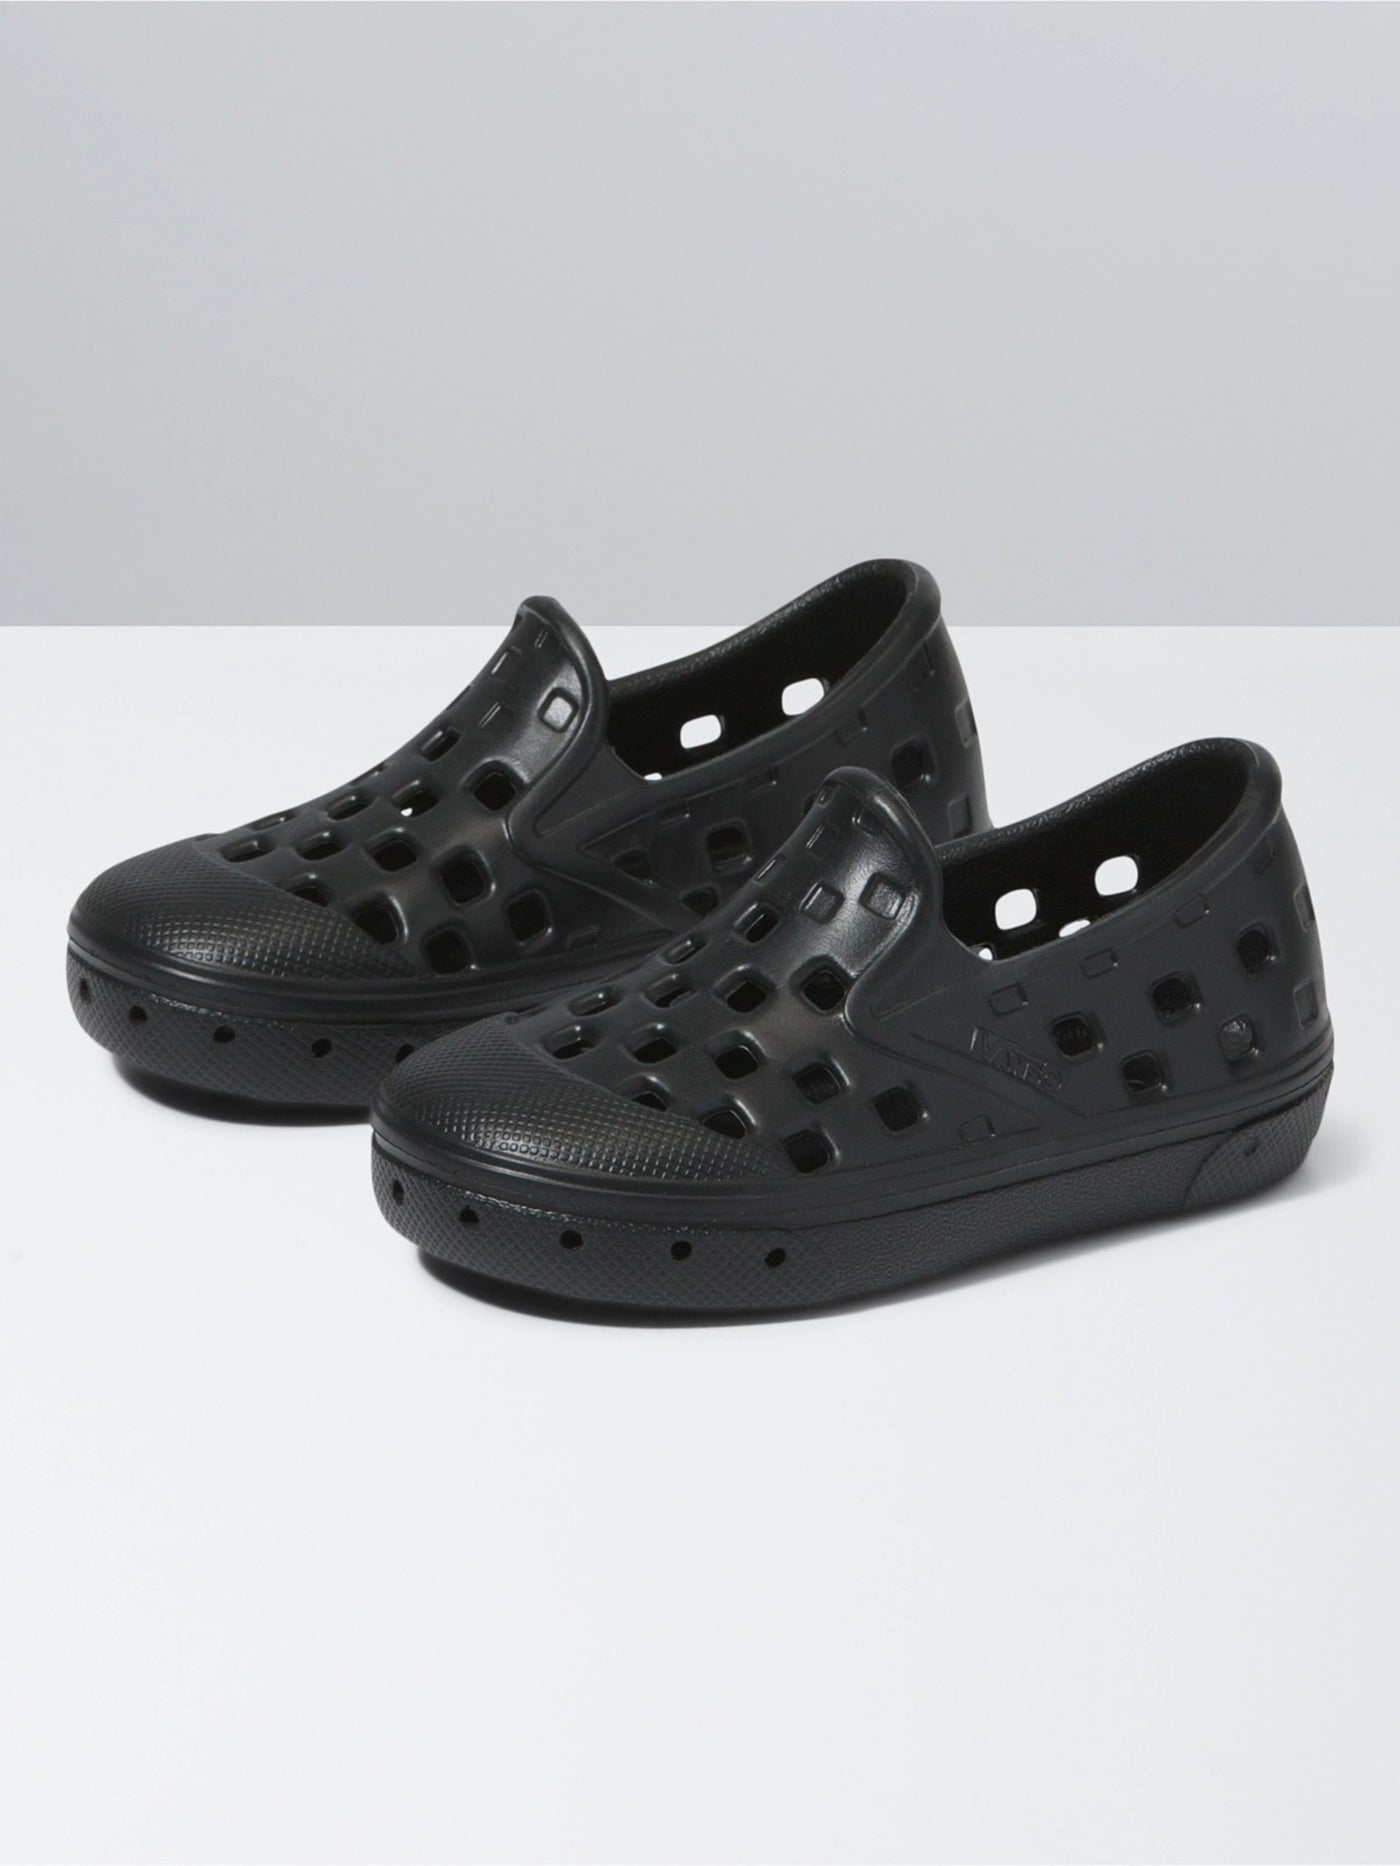 Vans Trek Black Slip-On Shoes